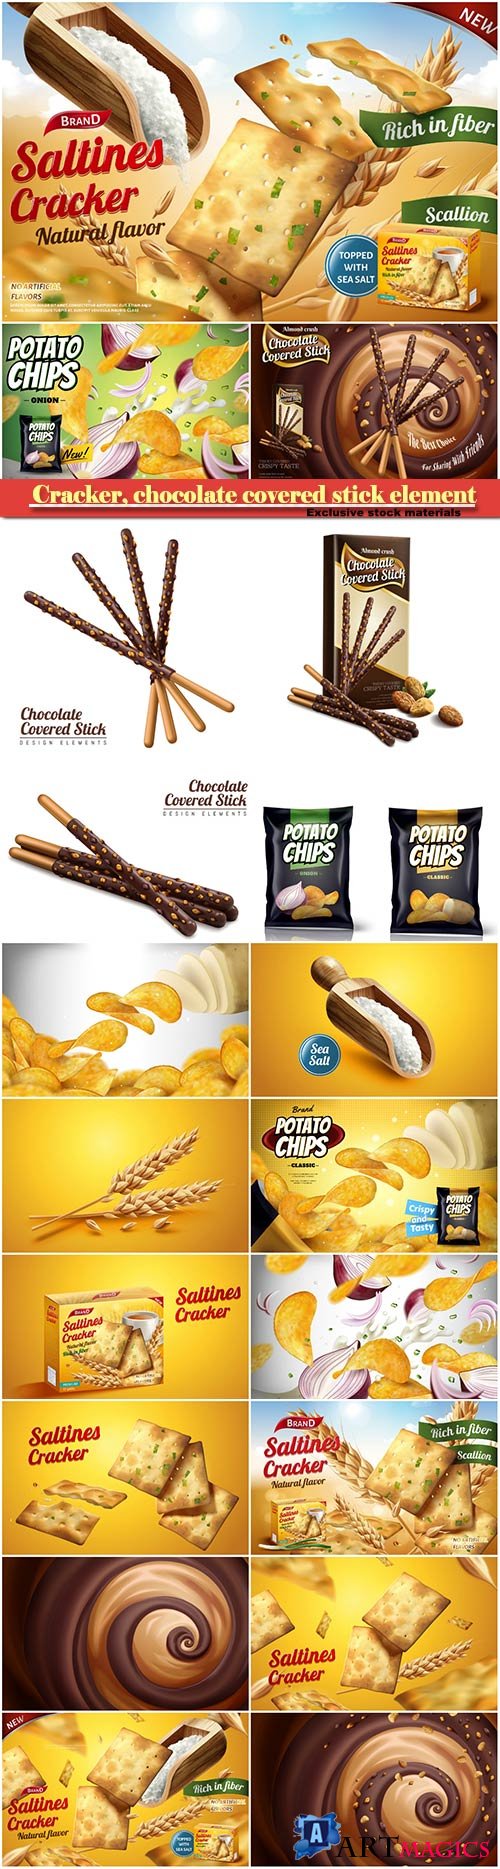 Saltines cracker ads, chocolate covered stick element, potato chip ads